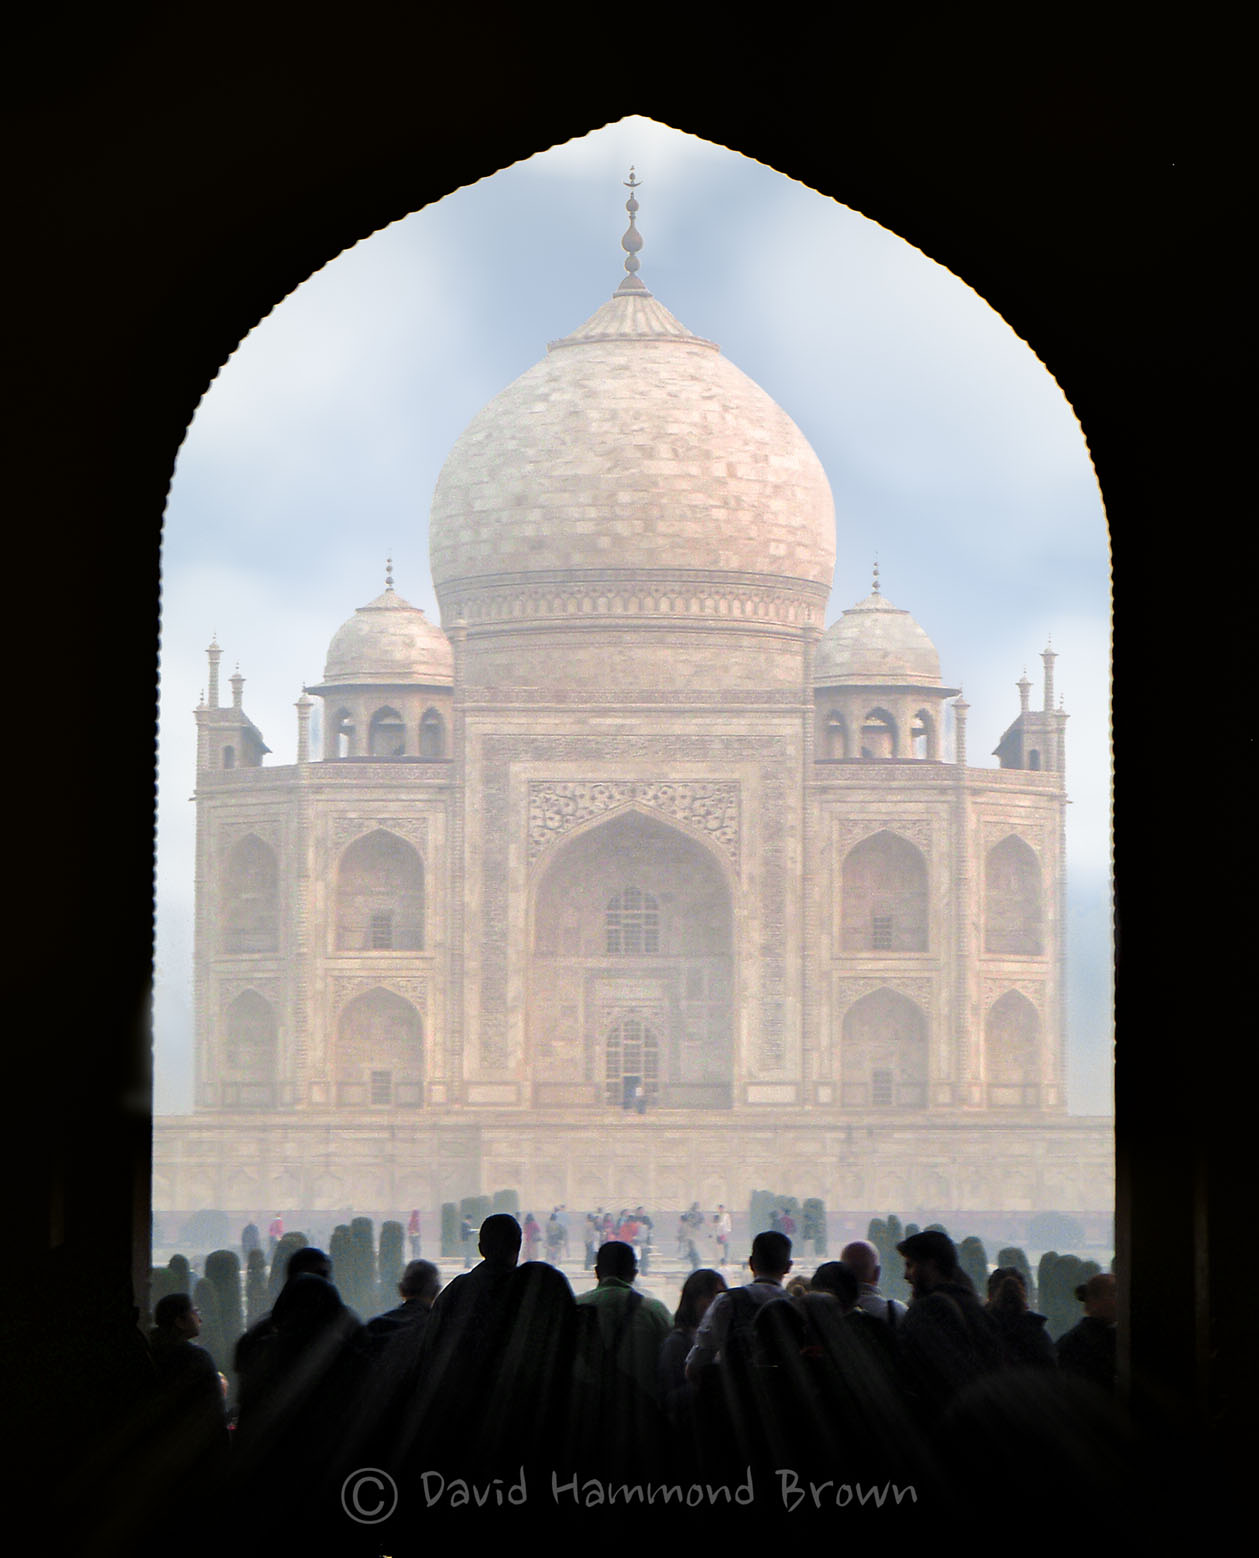 David Hammond Brown Photography - Taj and Crowd - Taj Mahal, India